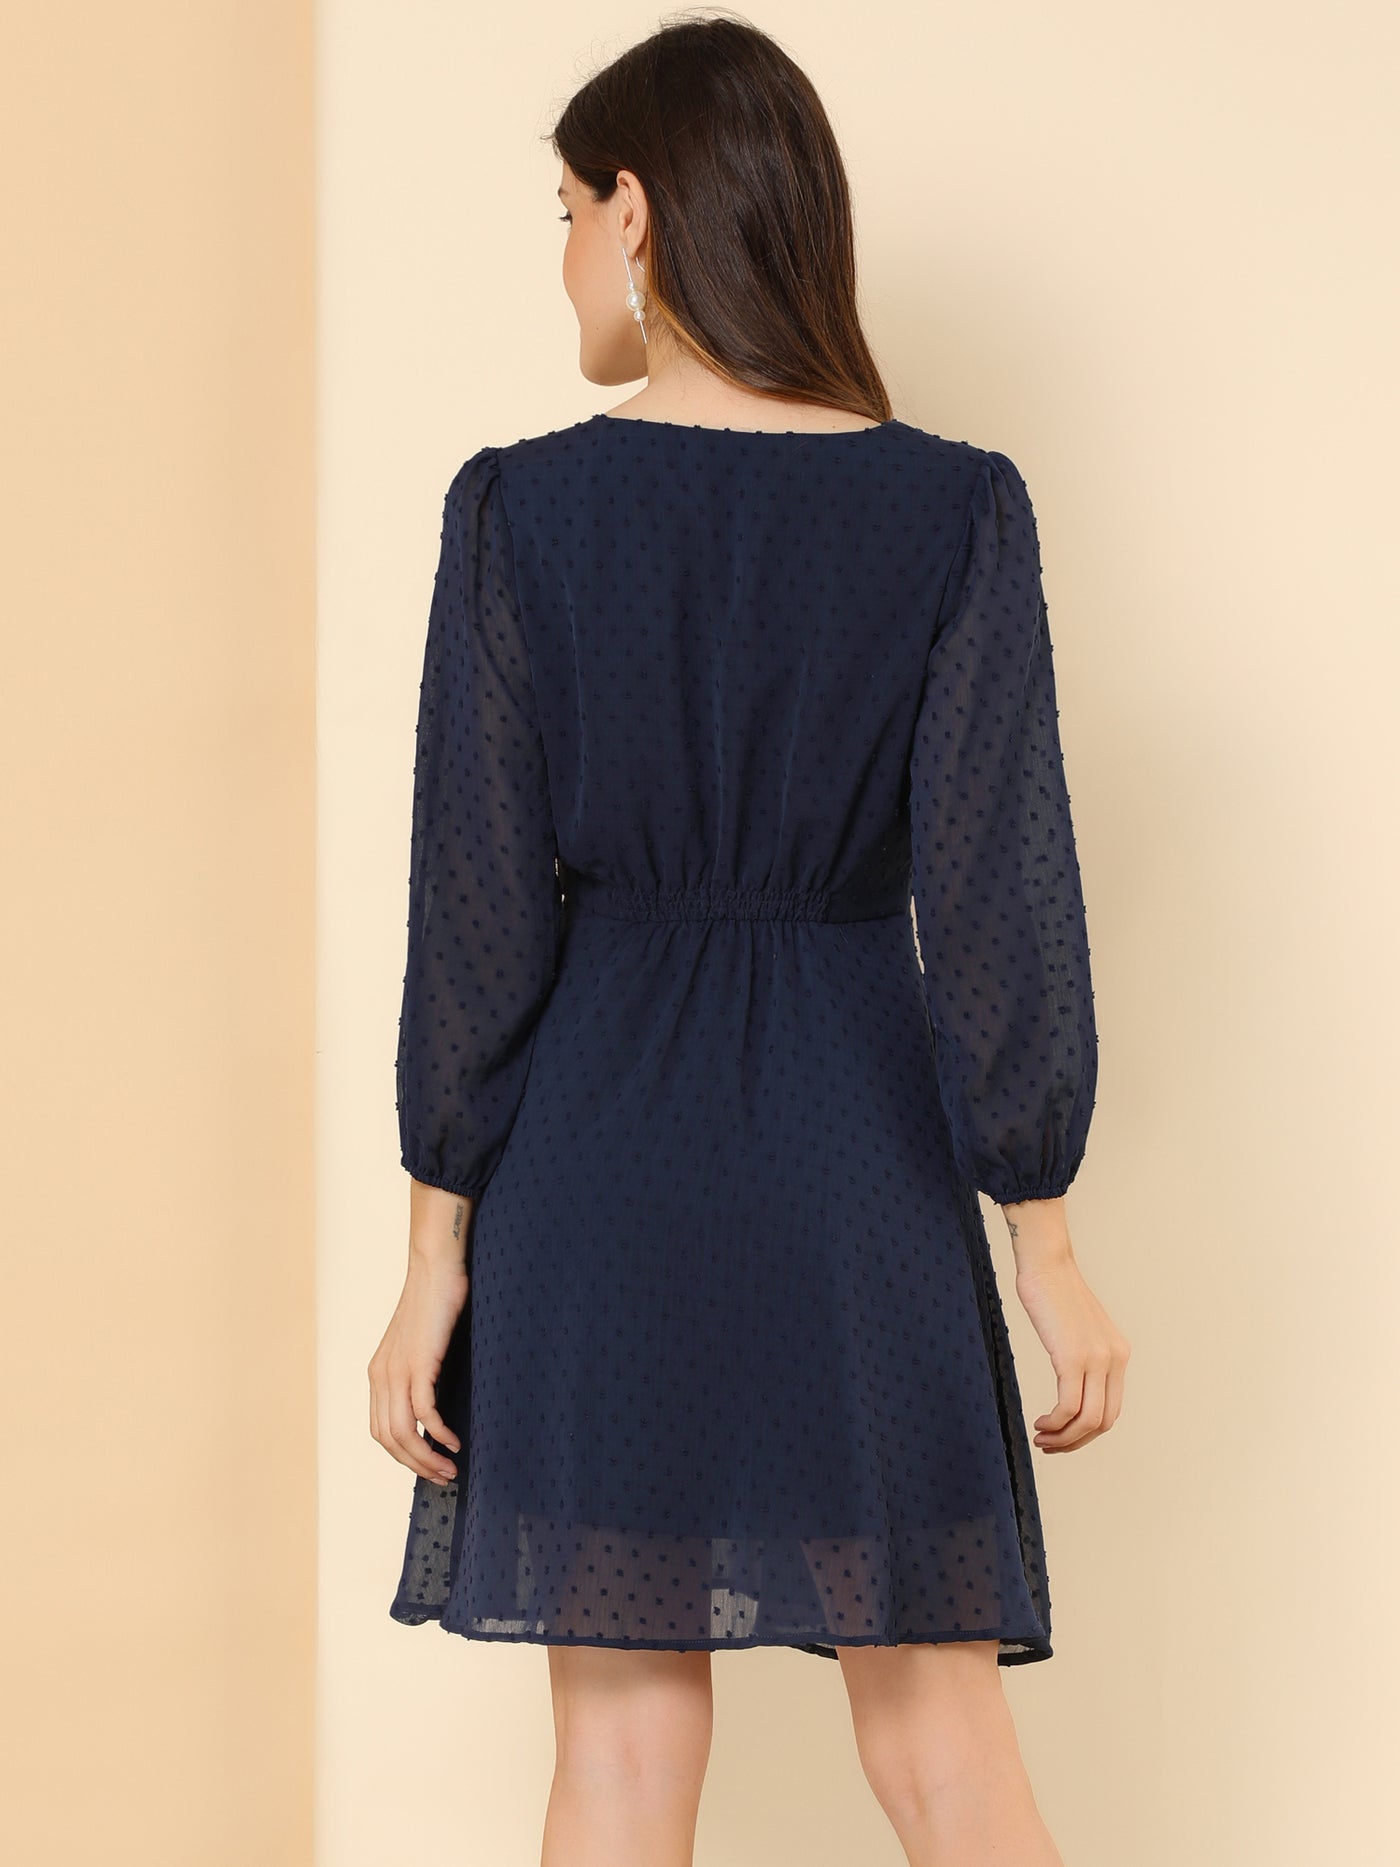 Allegra K Swiss Dots Elastic Waist 3/4 Sleeve A-line Solid Flowy Chiffon Dress